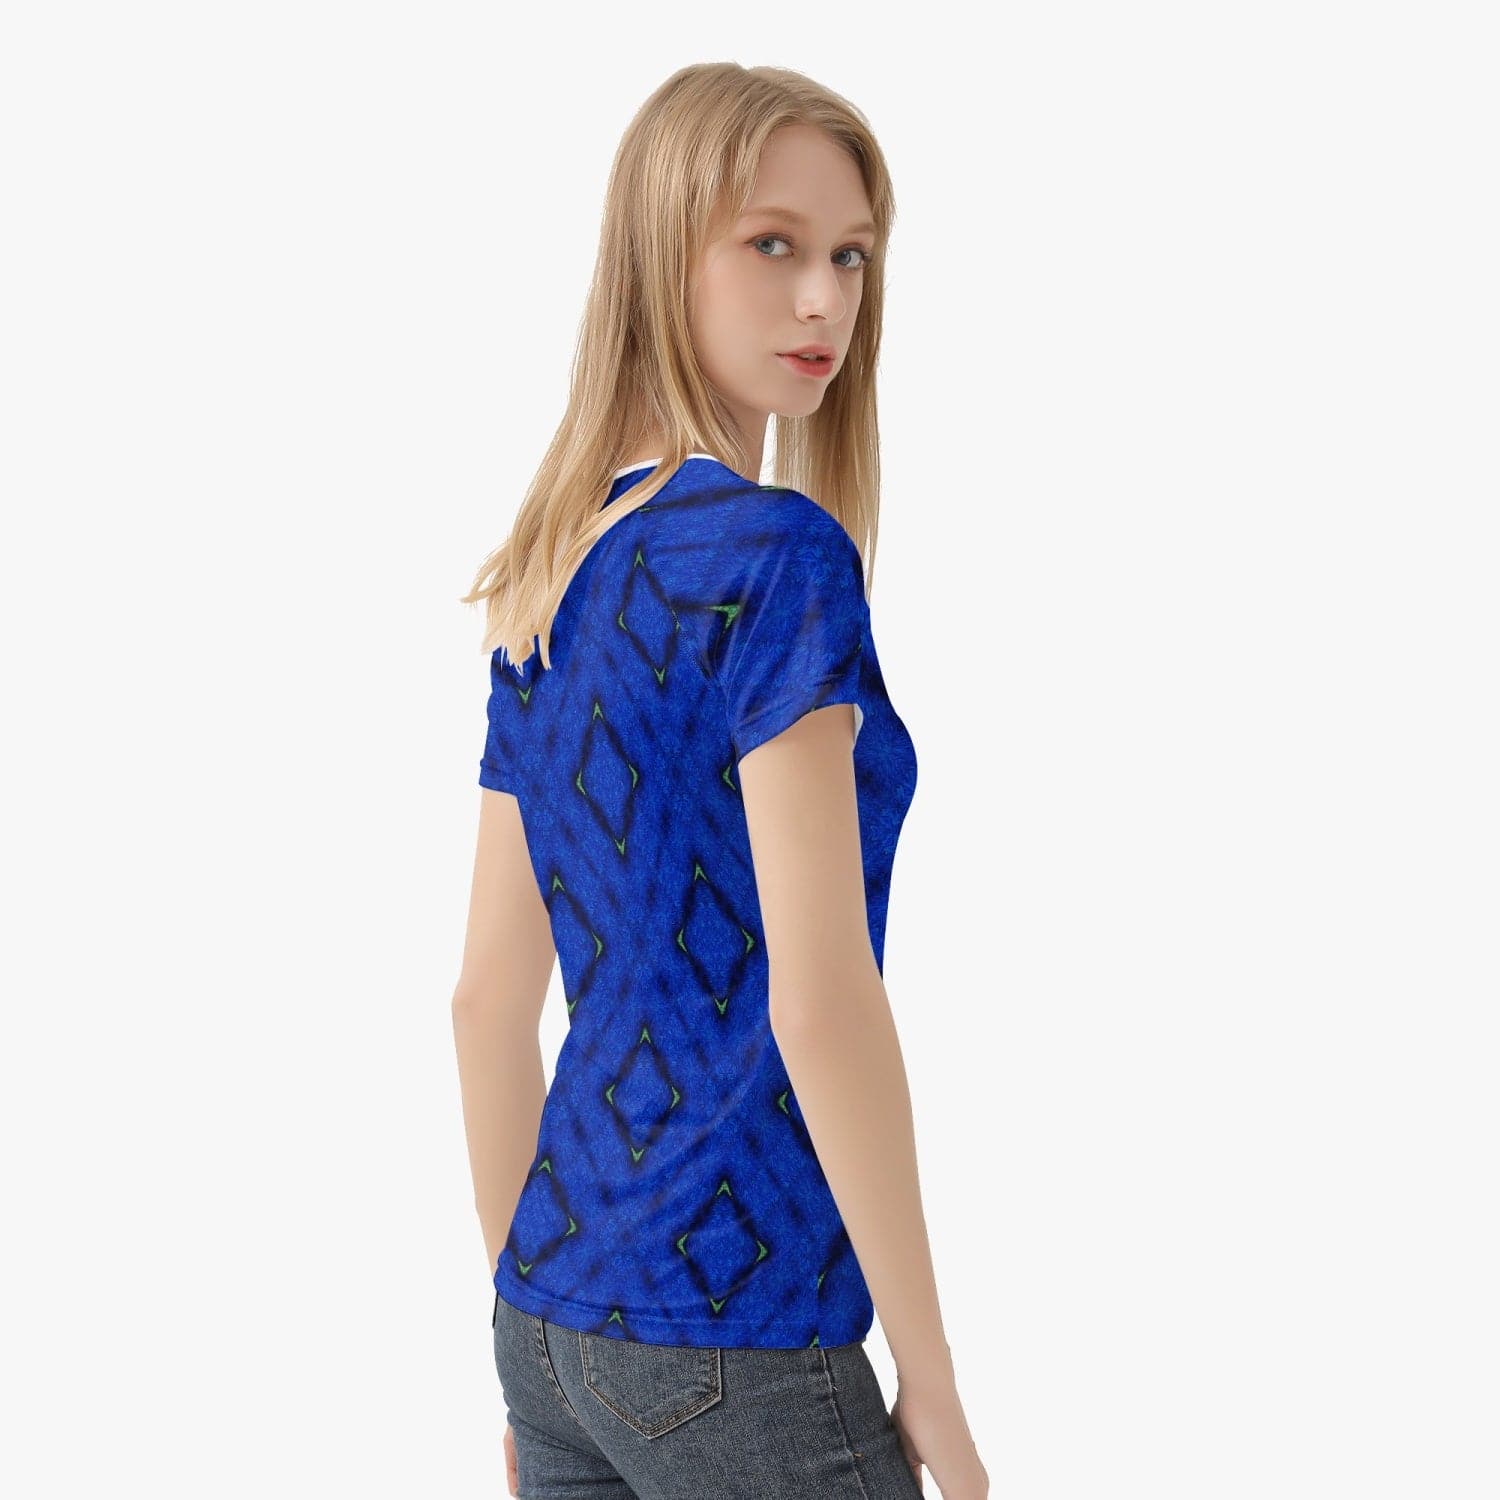 Indigo Third Eye Chacra Handmade Yoga Top for Women sports T-shirt, by Sensus Studio Design